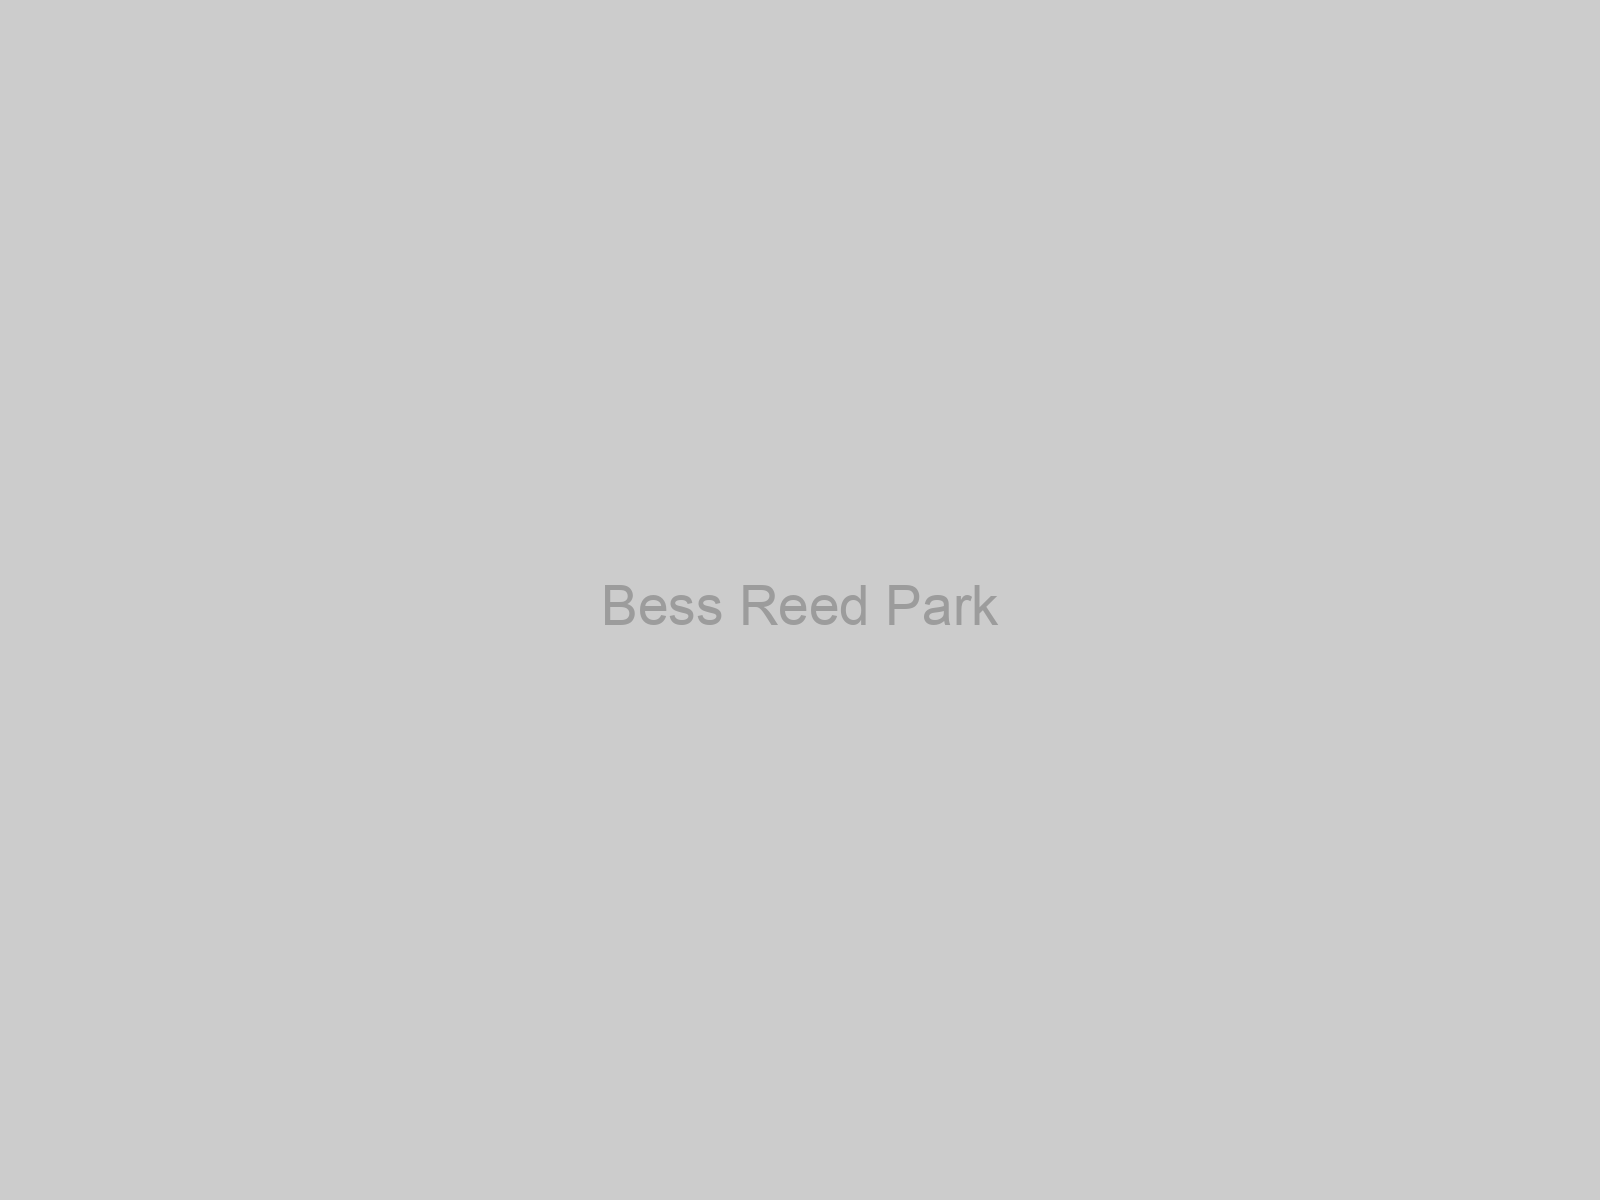 Bess Reed Park